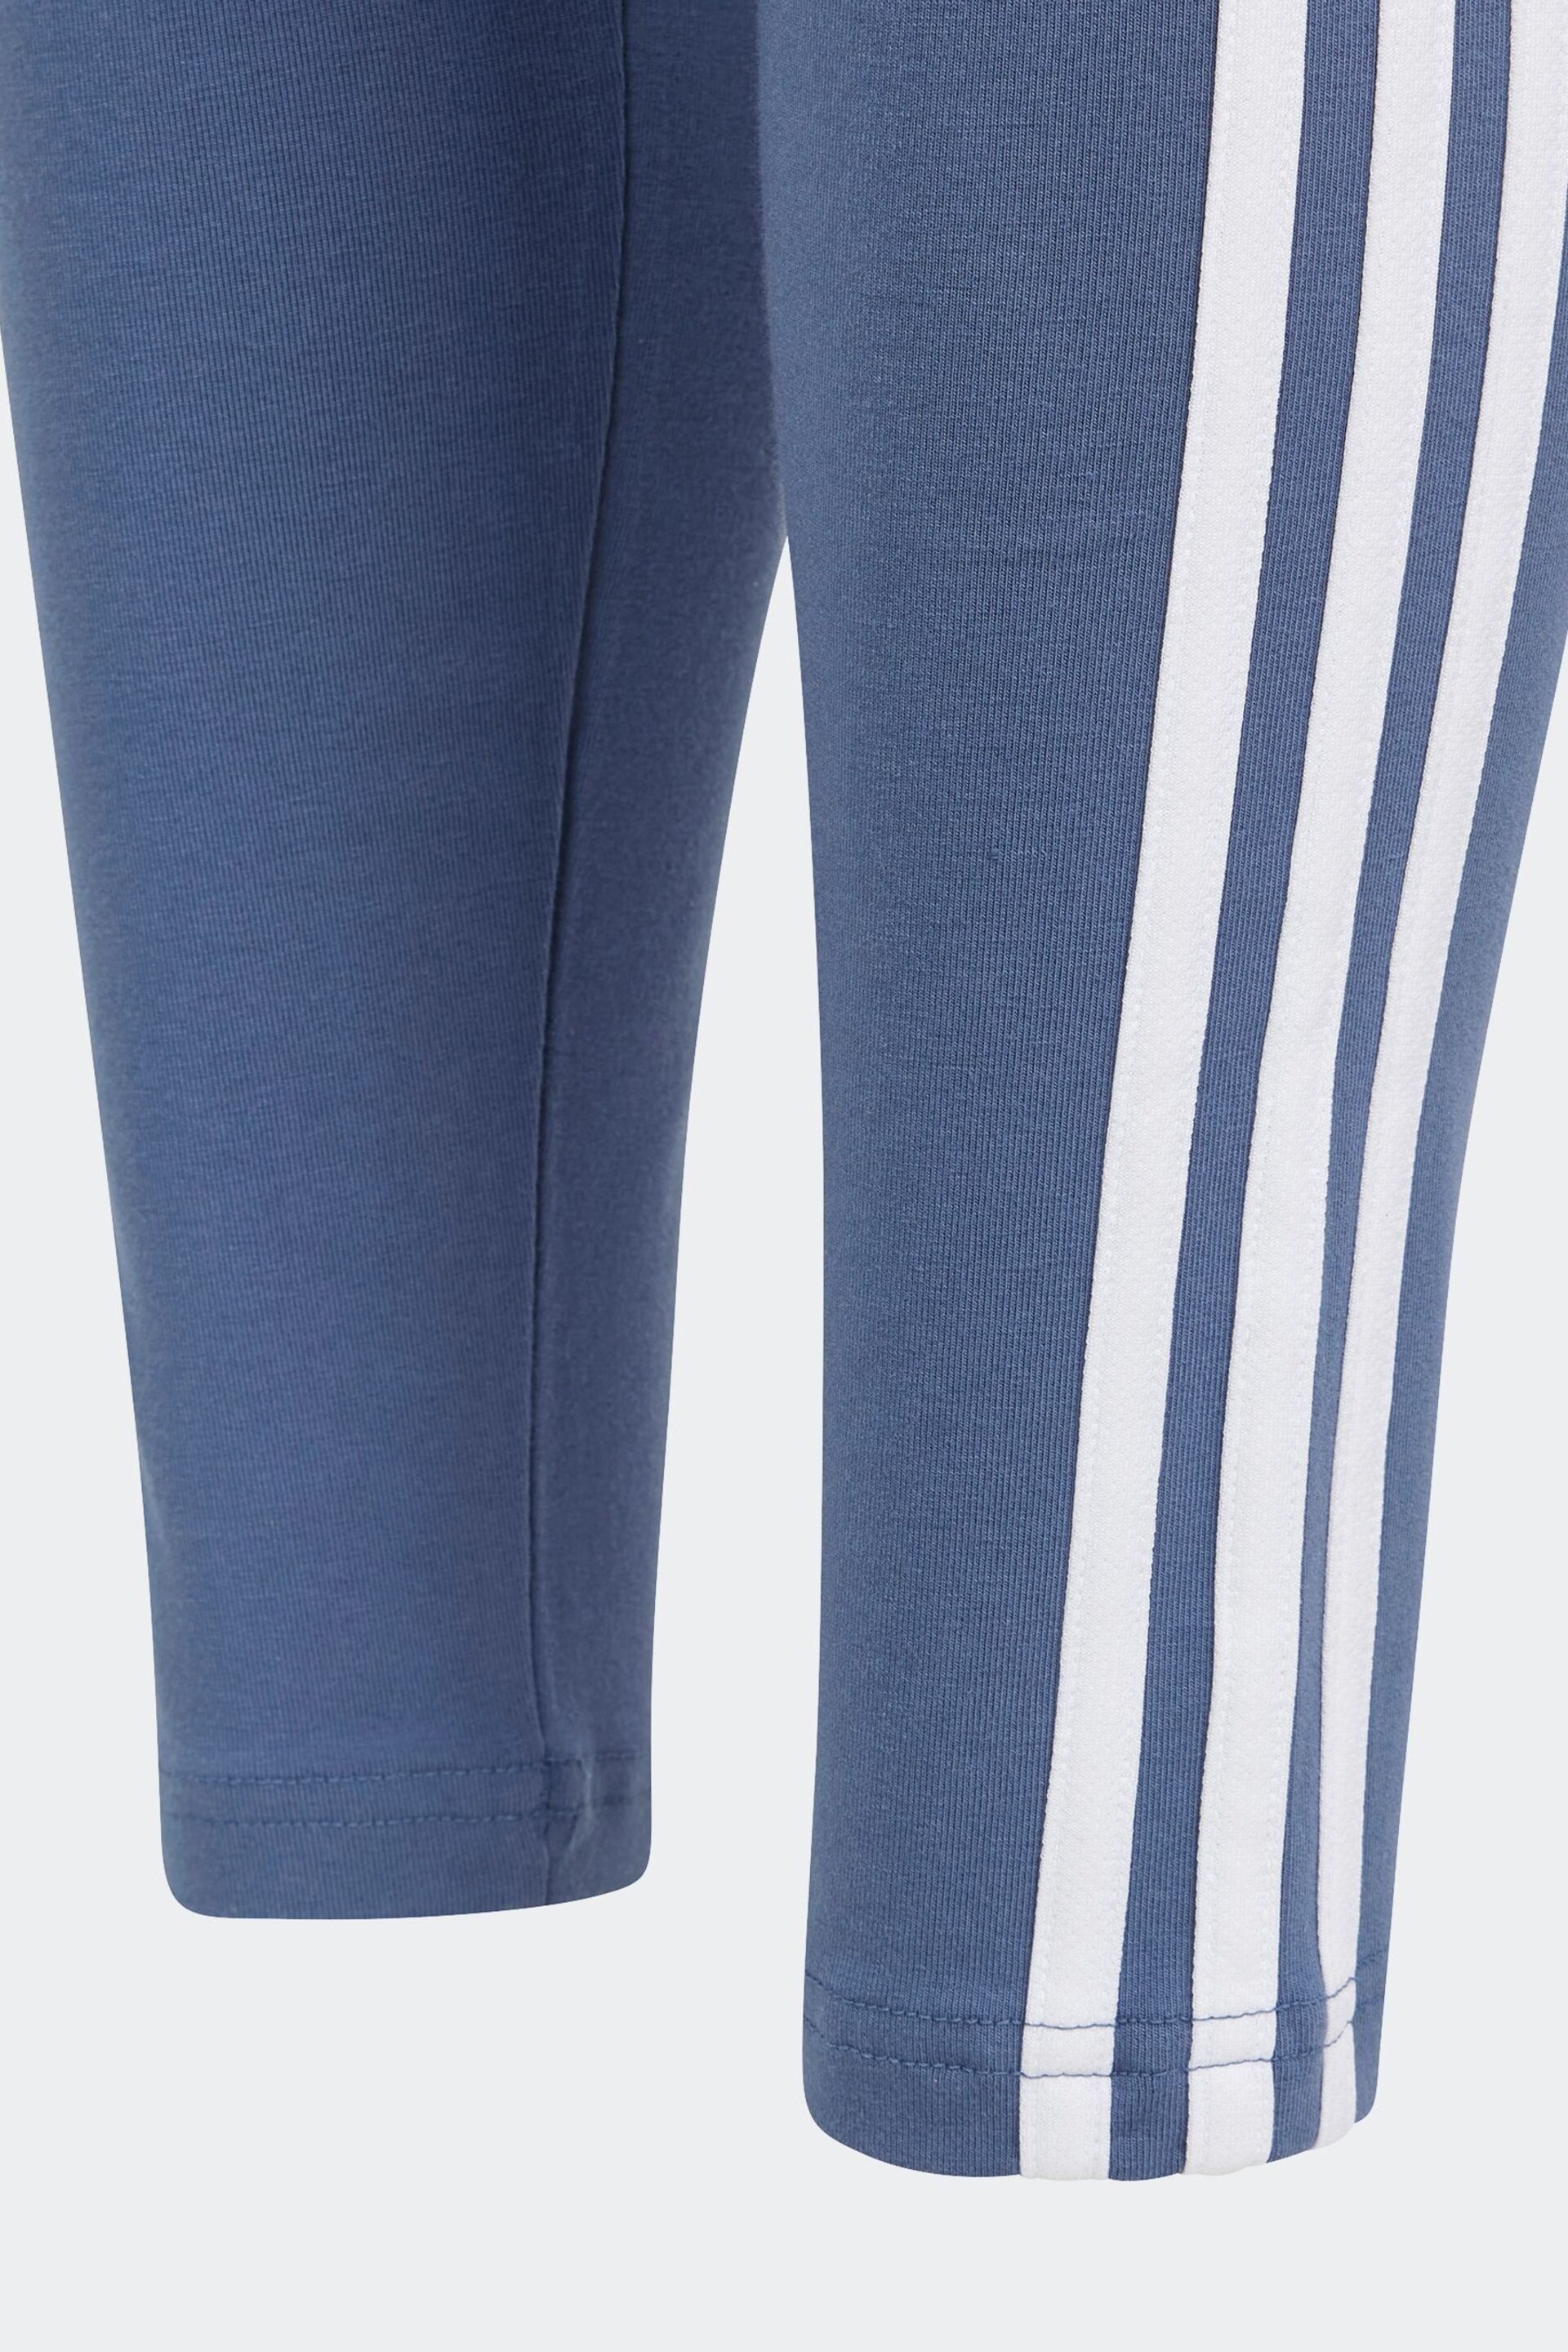 adidas Blue Sportswear Essentials 3 Stripes Cotton Leggings - Image 5 of 5